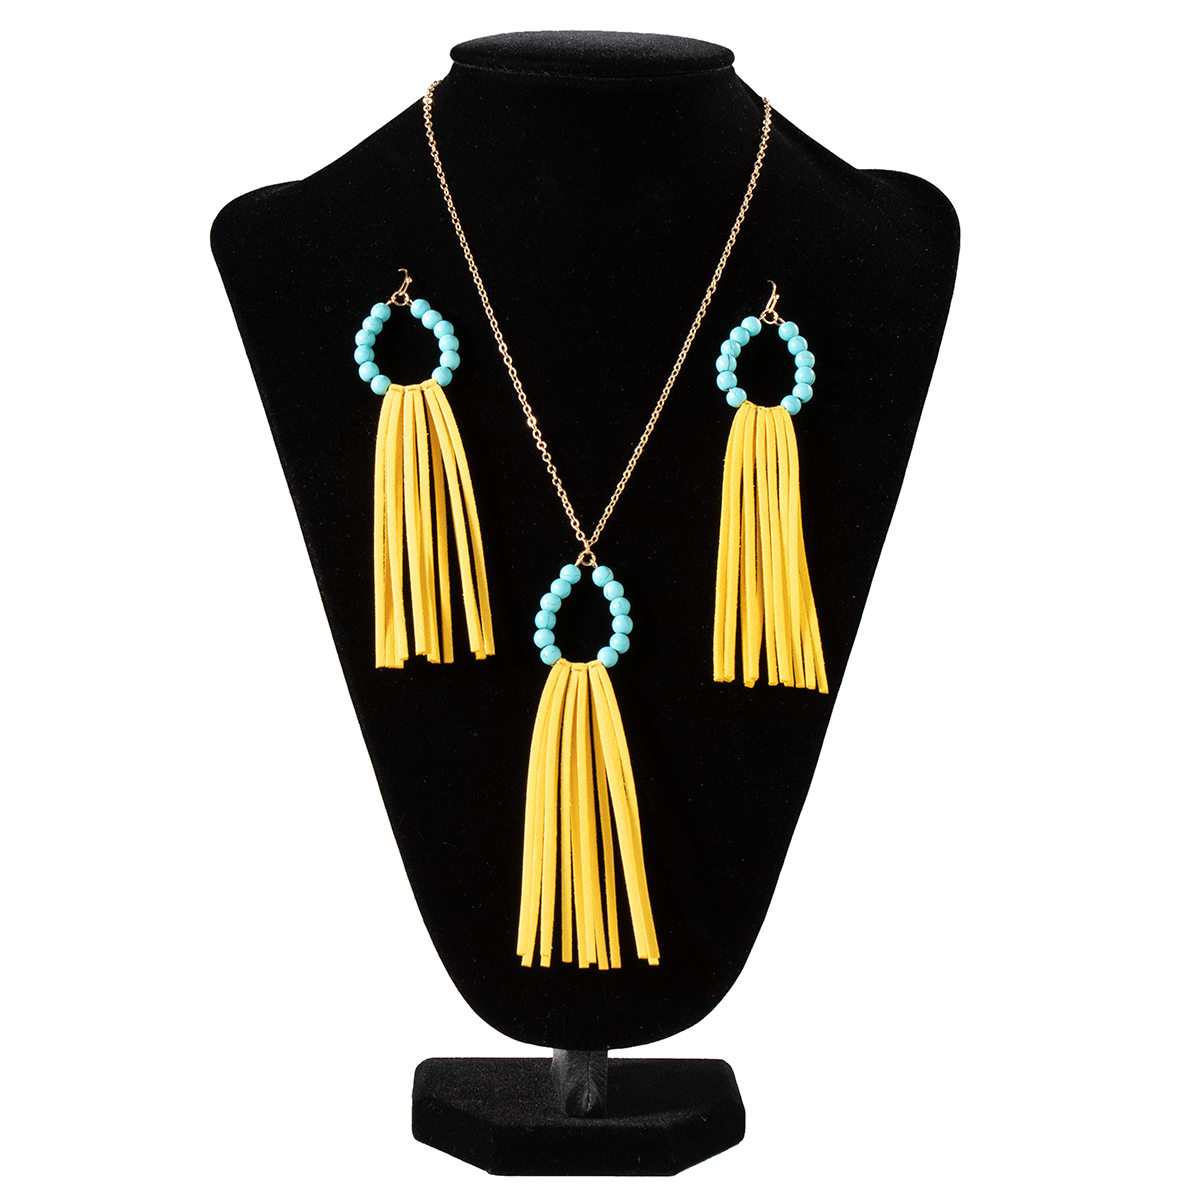 Silver Strike Women's Necklace & Earrings Set - Turquoise Beads Yellow Tassel